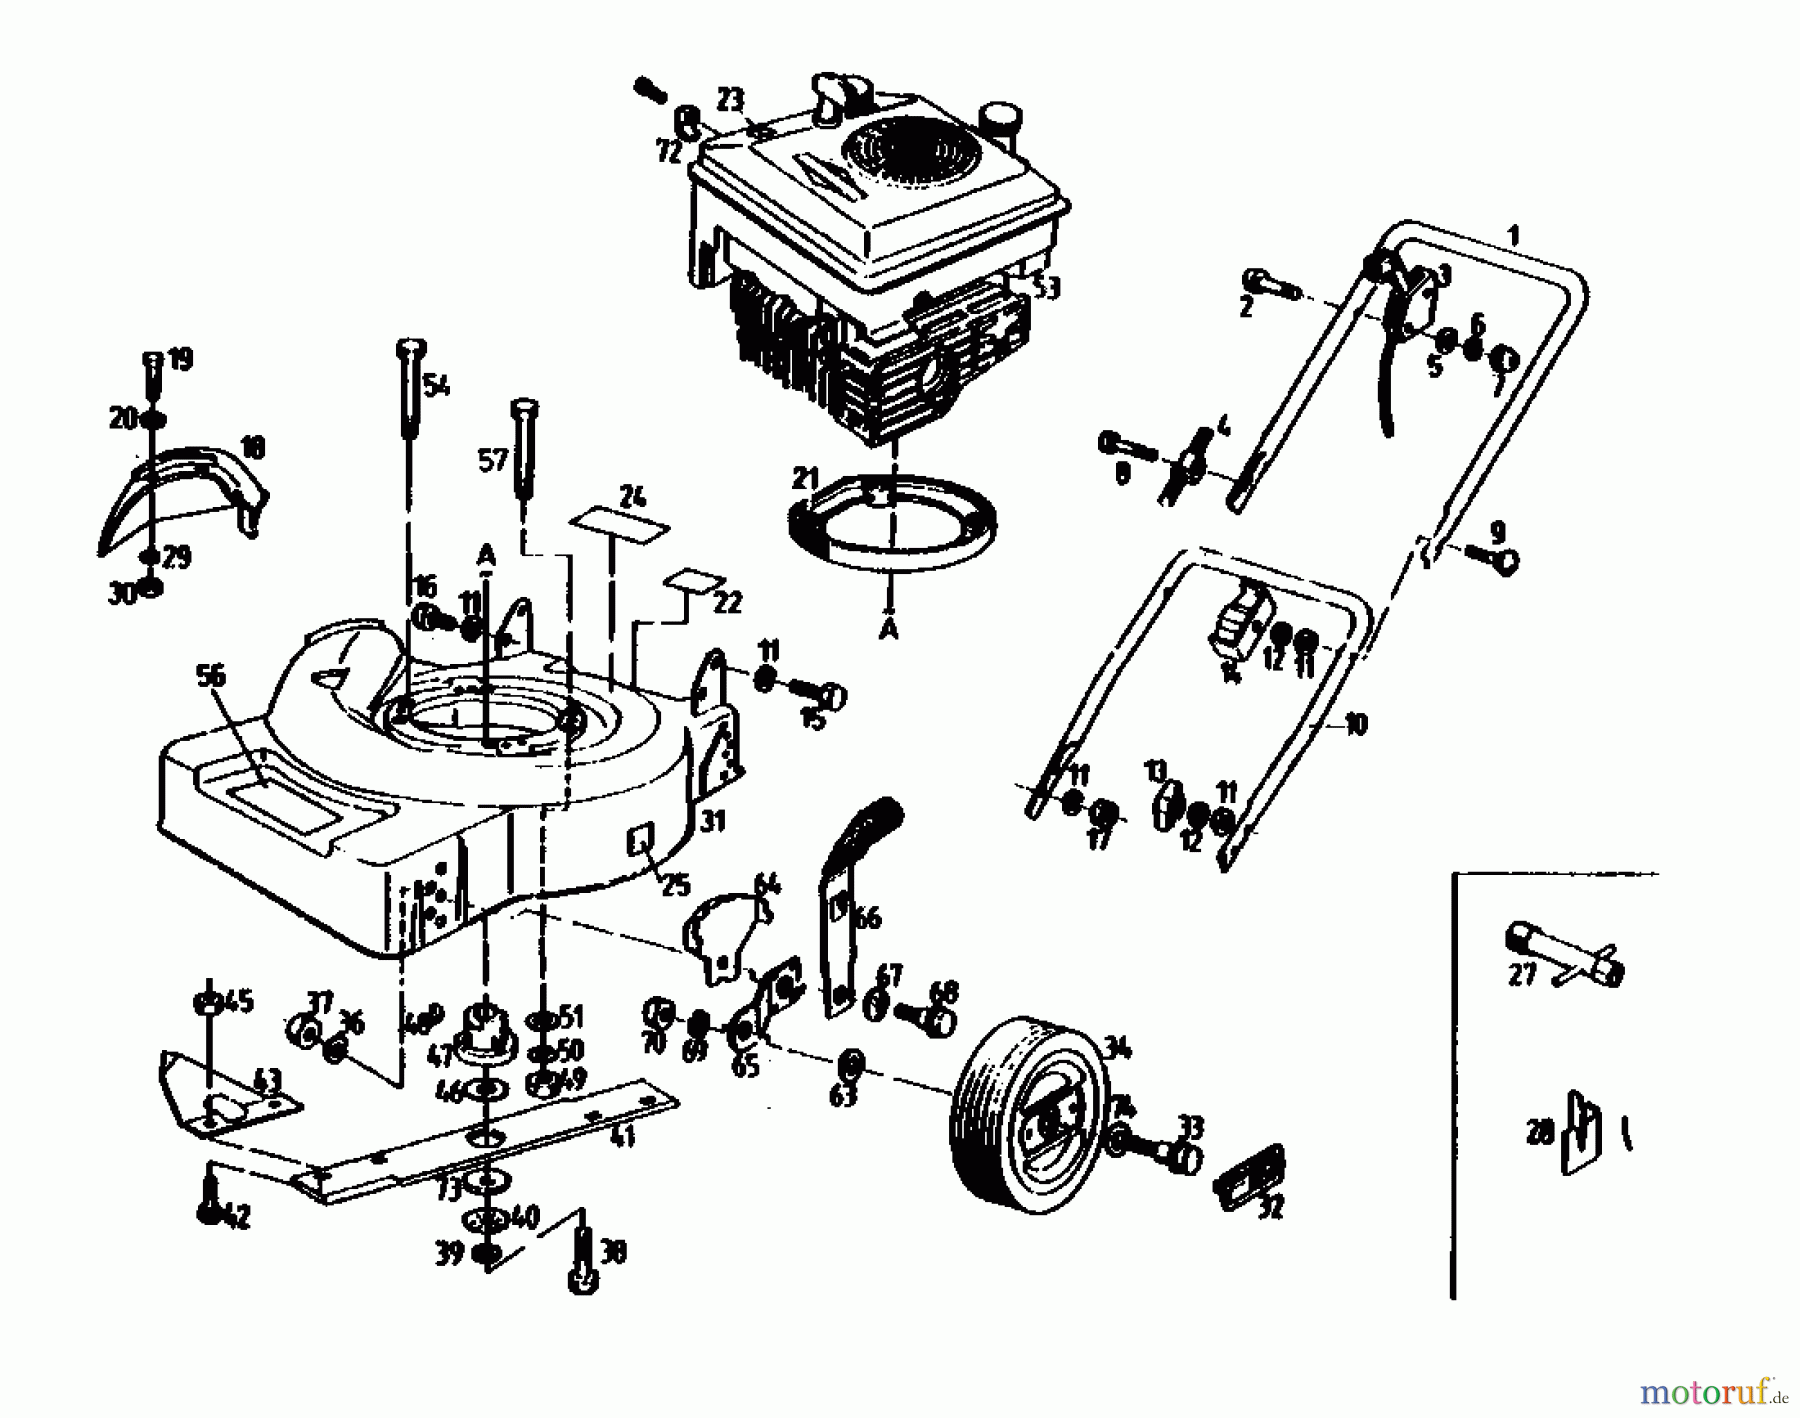  Gutbrod Petrol mower TURBO SBS 02670.02  (1991) Basic machine